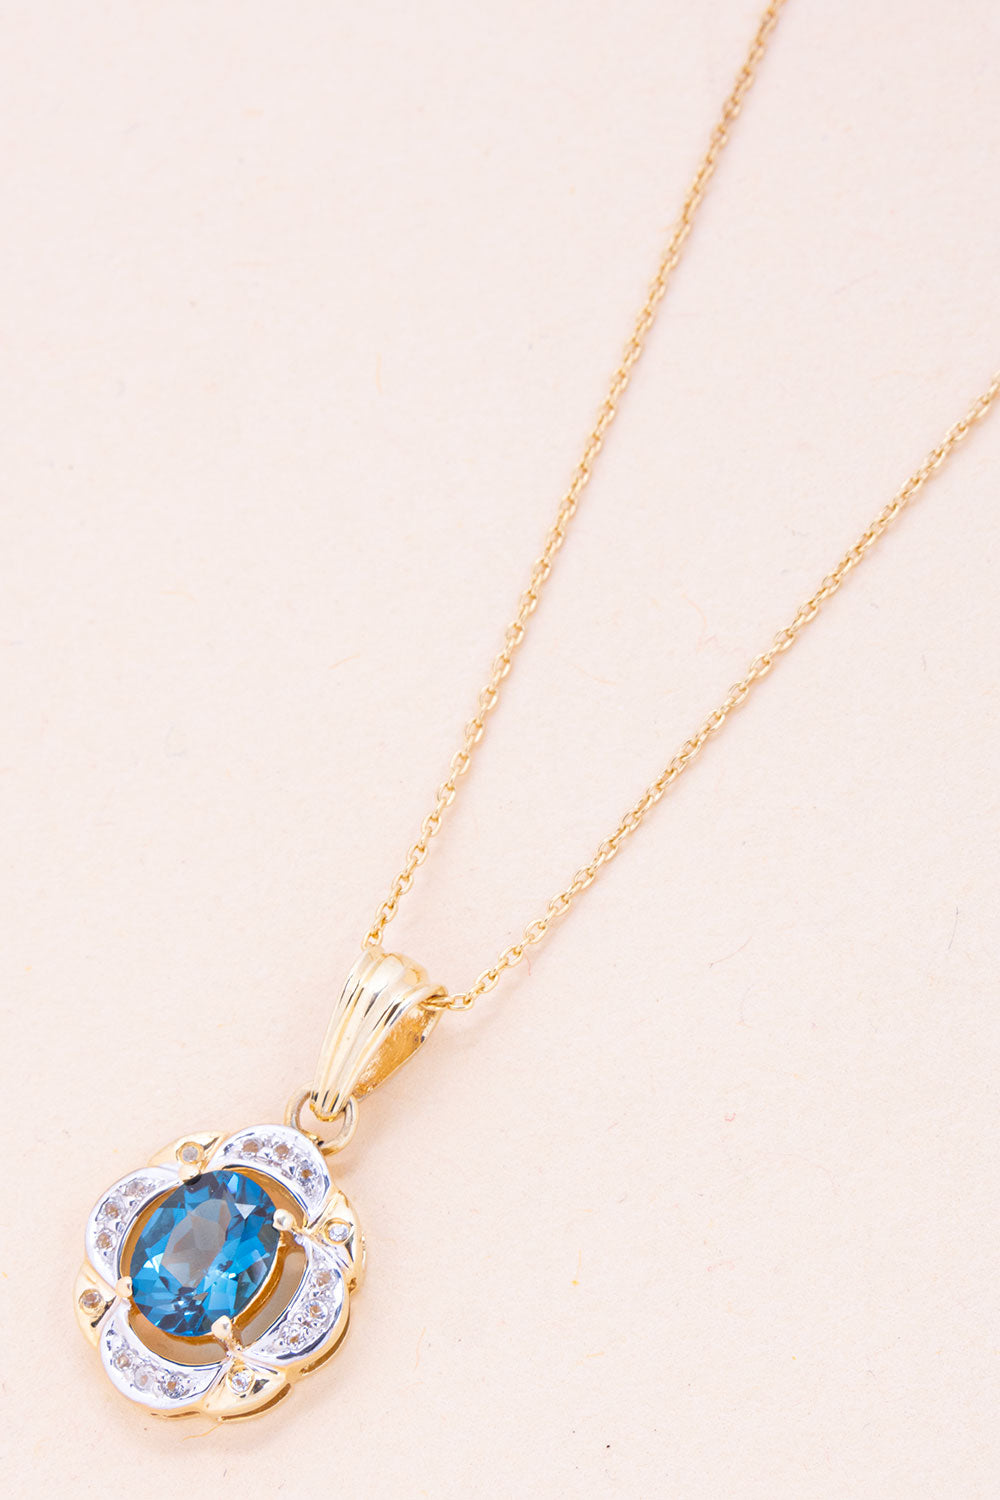 Amethyst Blue And White Topaz Silver Necklace Pendant Chain 10067172 - Avishya